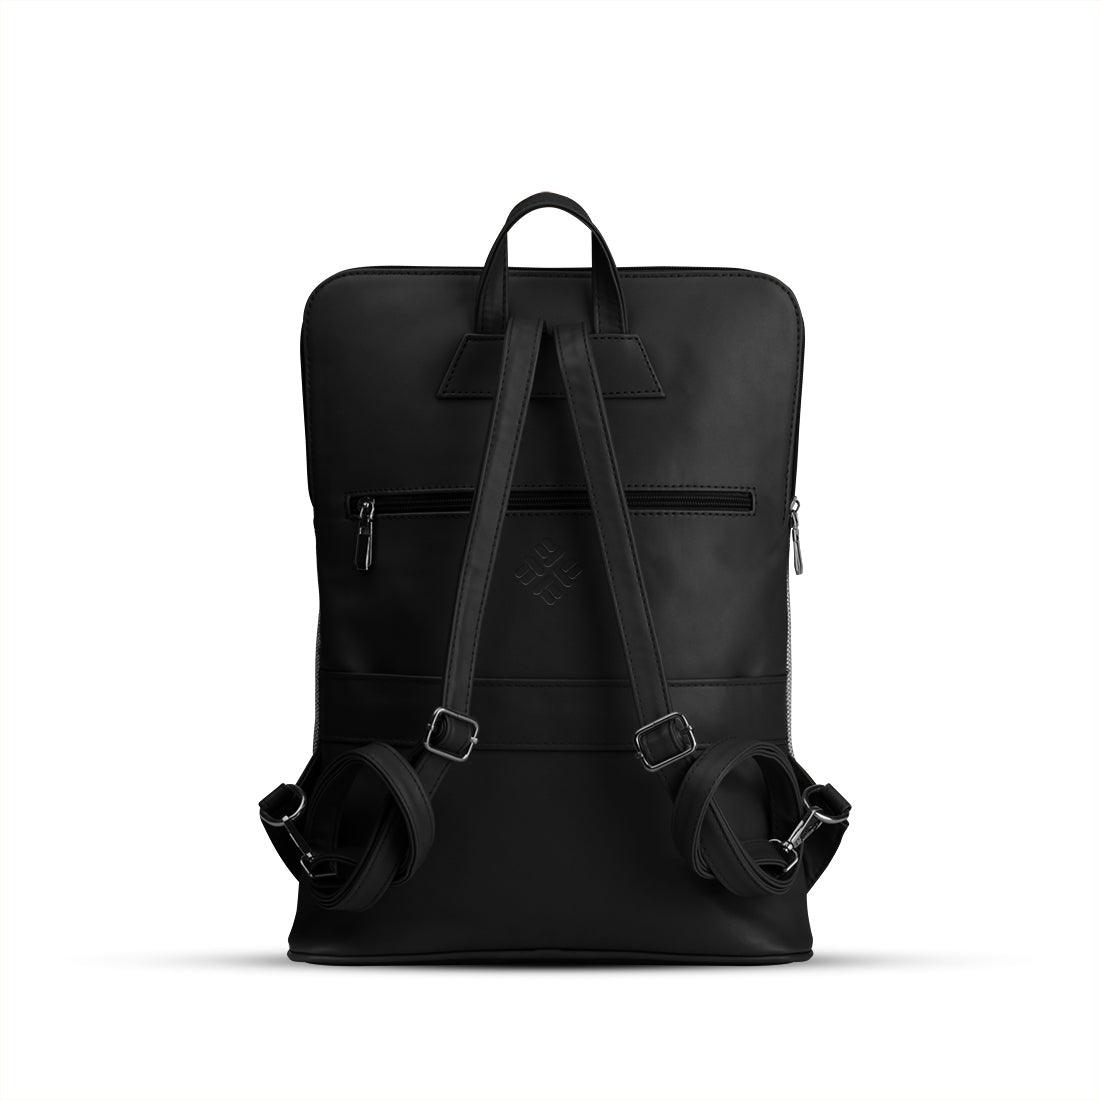 Black Orbit Laptop Backpack Monkey - CANVAEGYPT